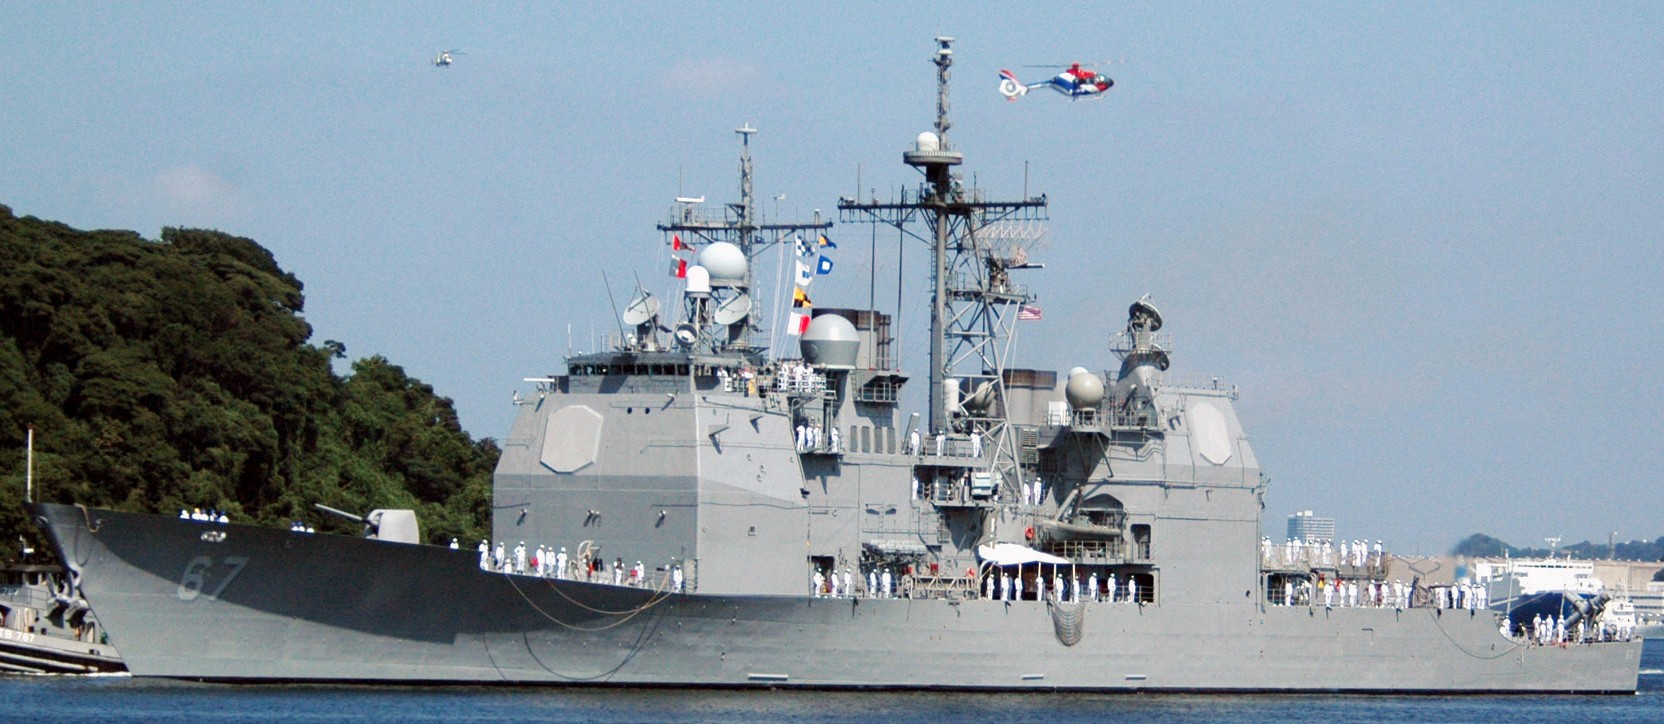 cg-67 uss shiloh ticonderoga class guided missile cruiser aegis us navy 12